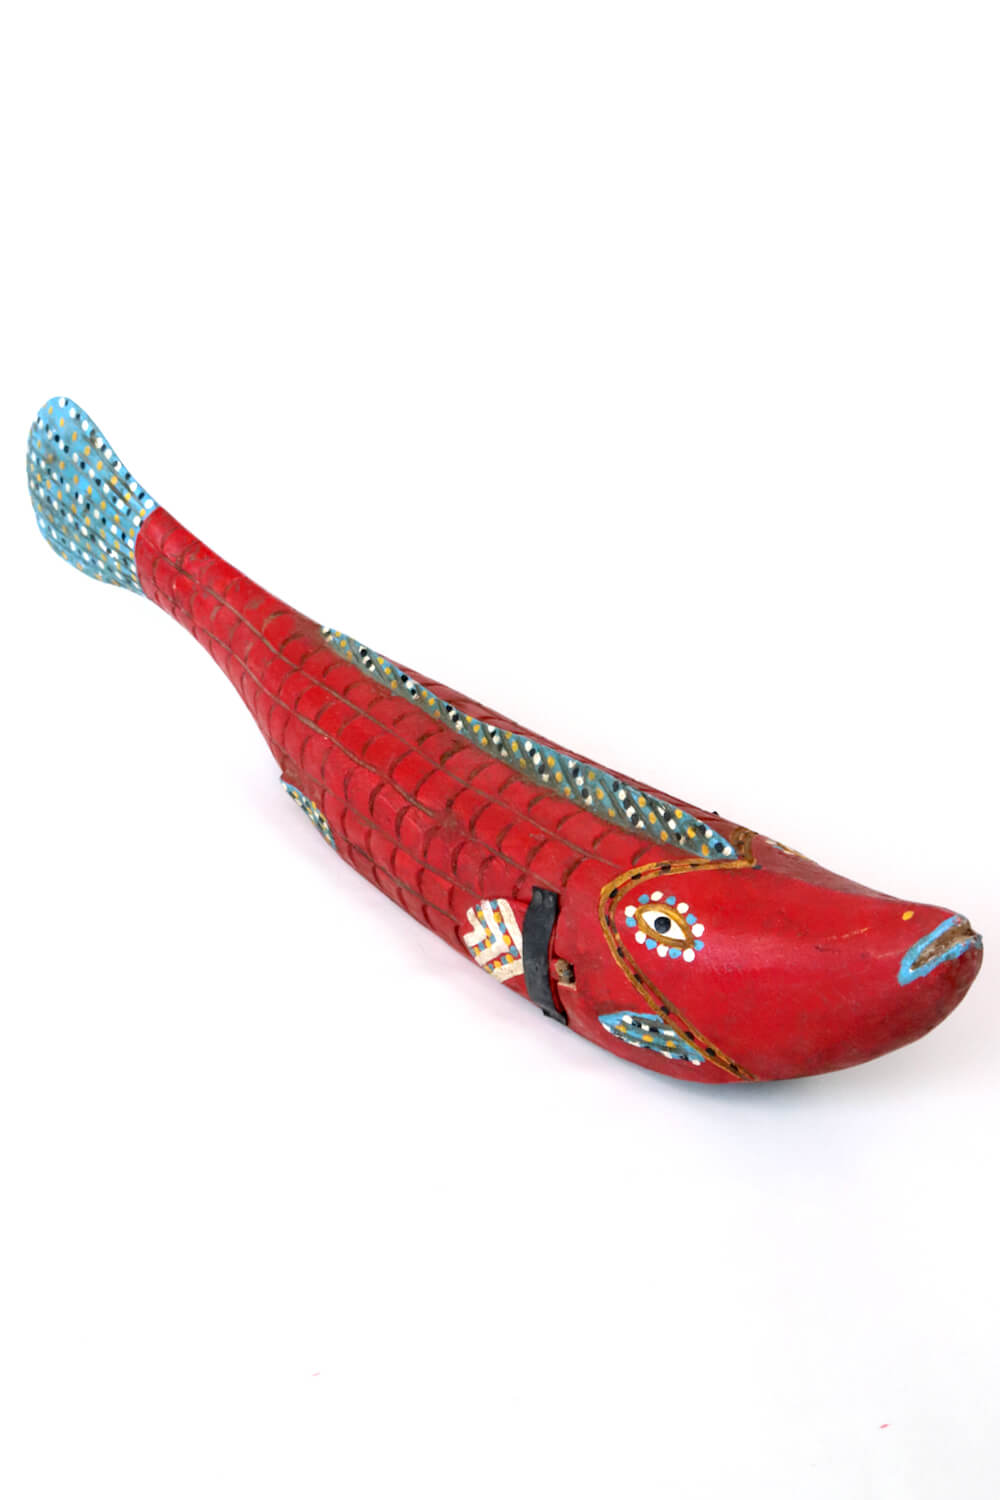 Großer Bozo-Fisch rot 94 cm